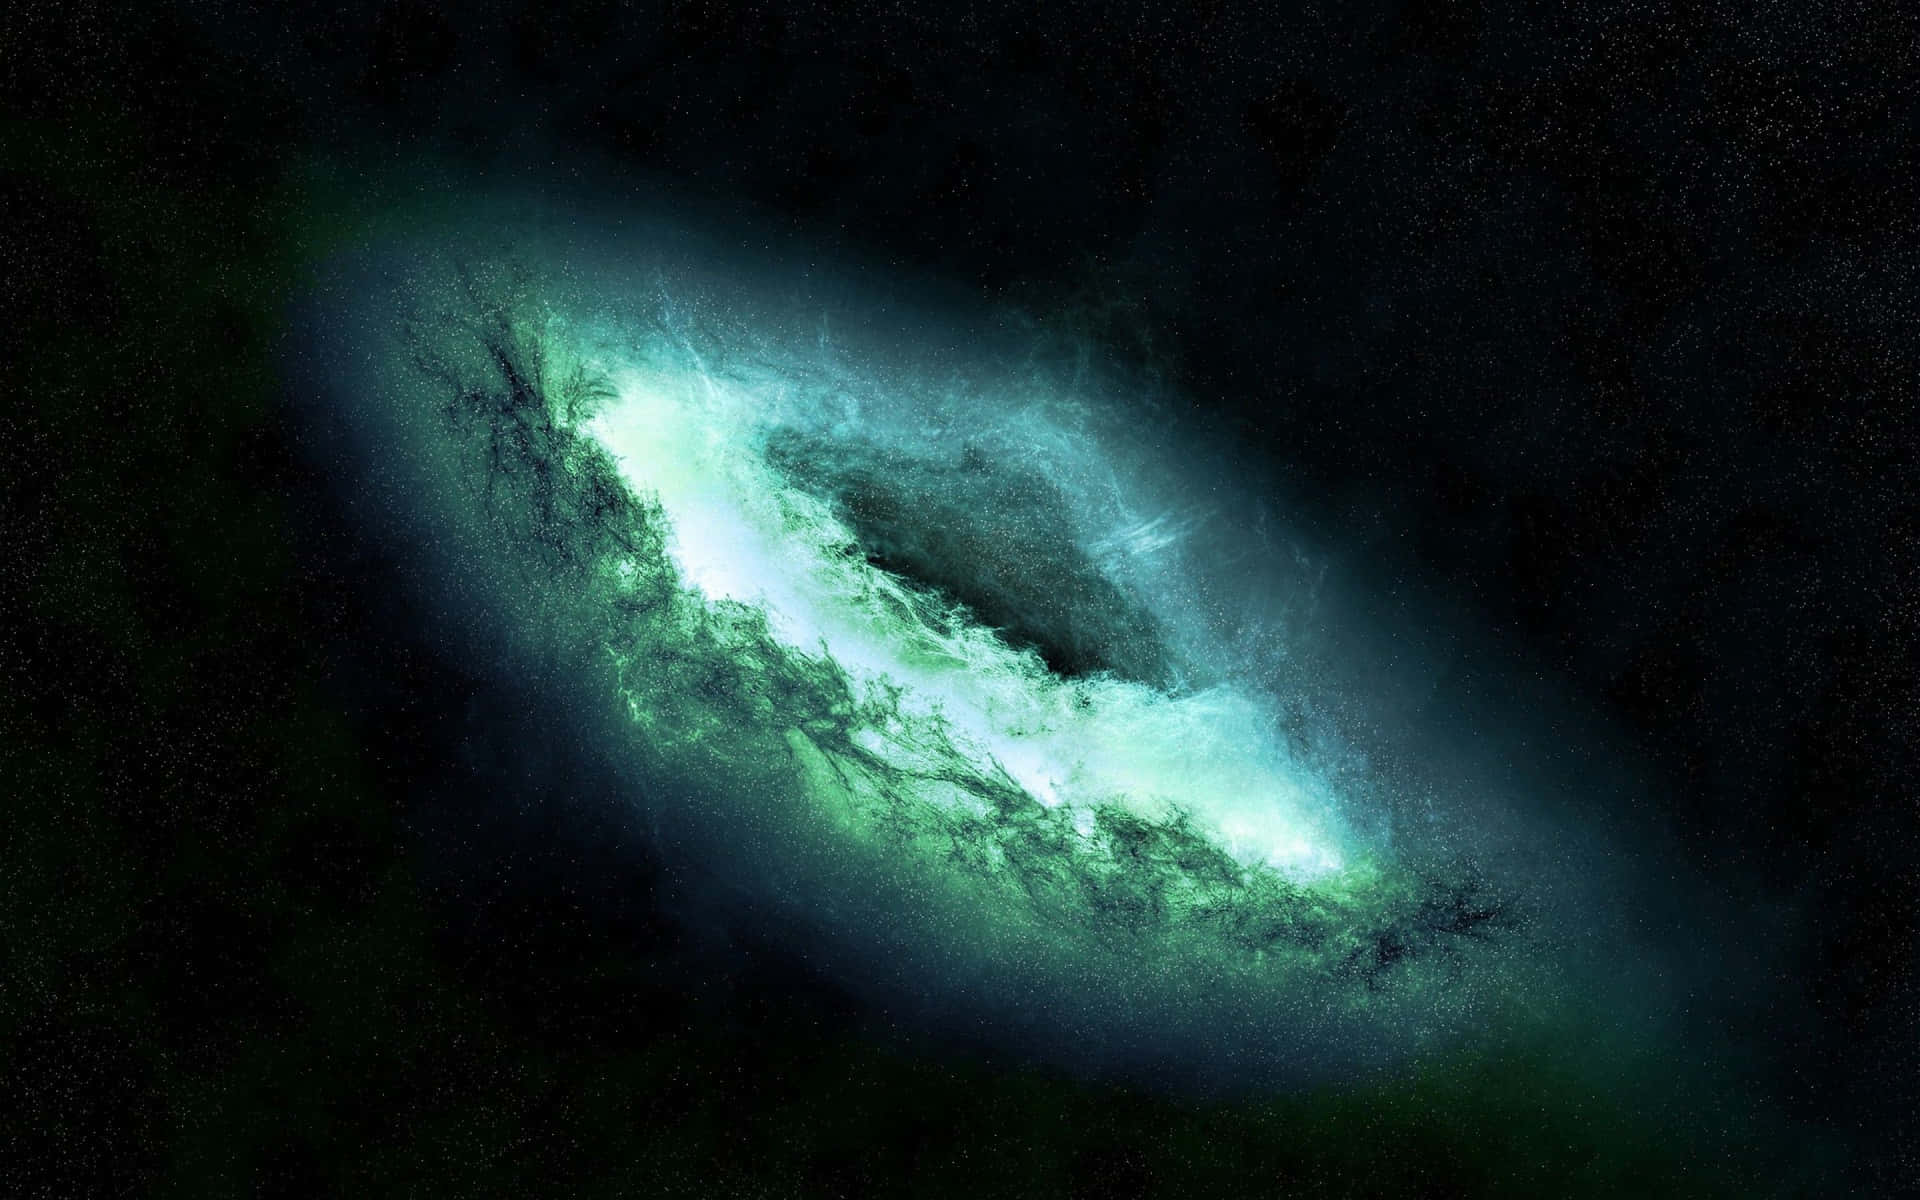 Black Galaxy Background: A Glimpse into the Universe